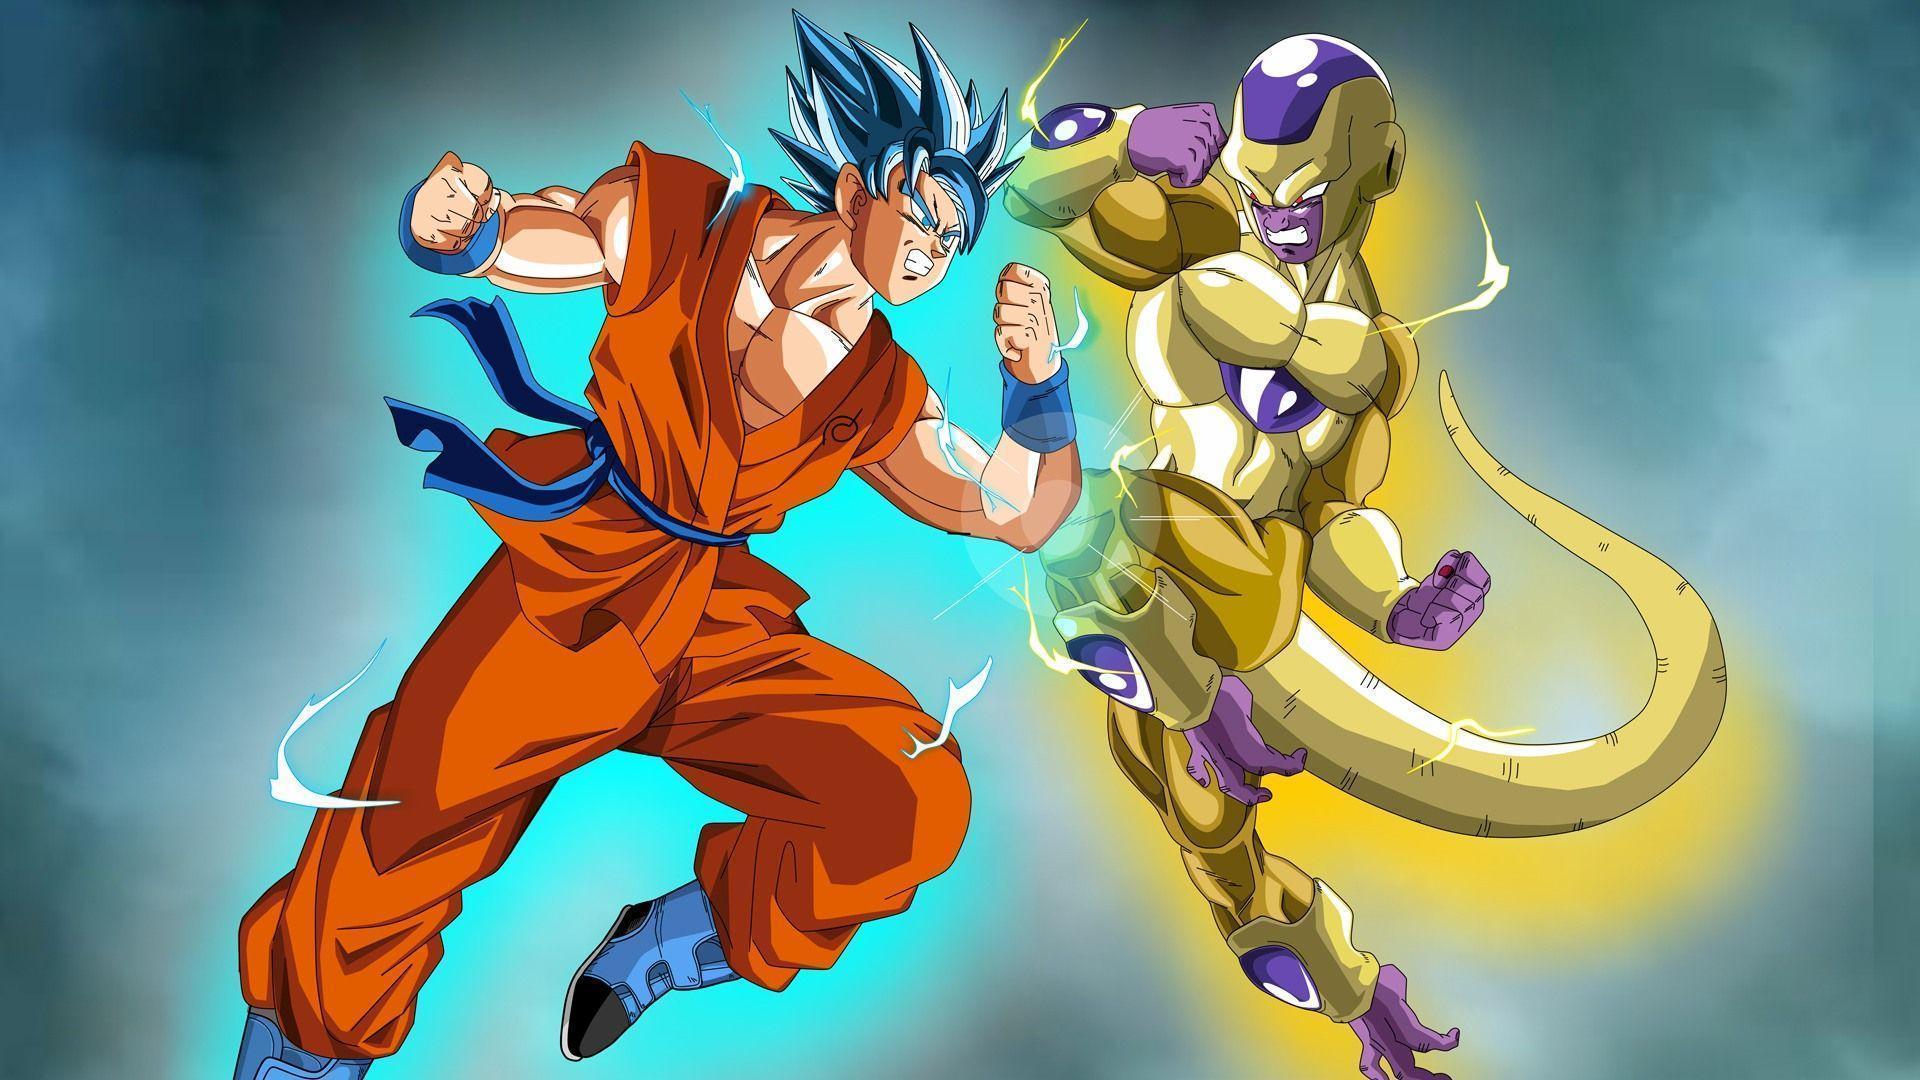 Goku Super Saiyan Blue vs Golden Fri. Wallpaper